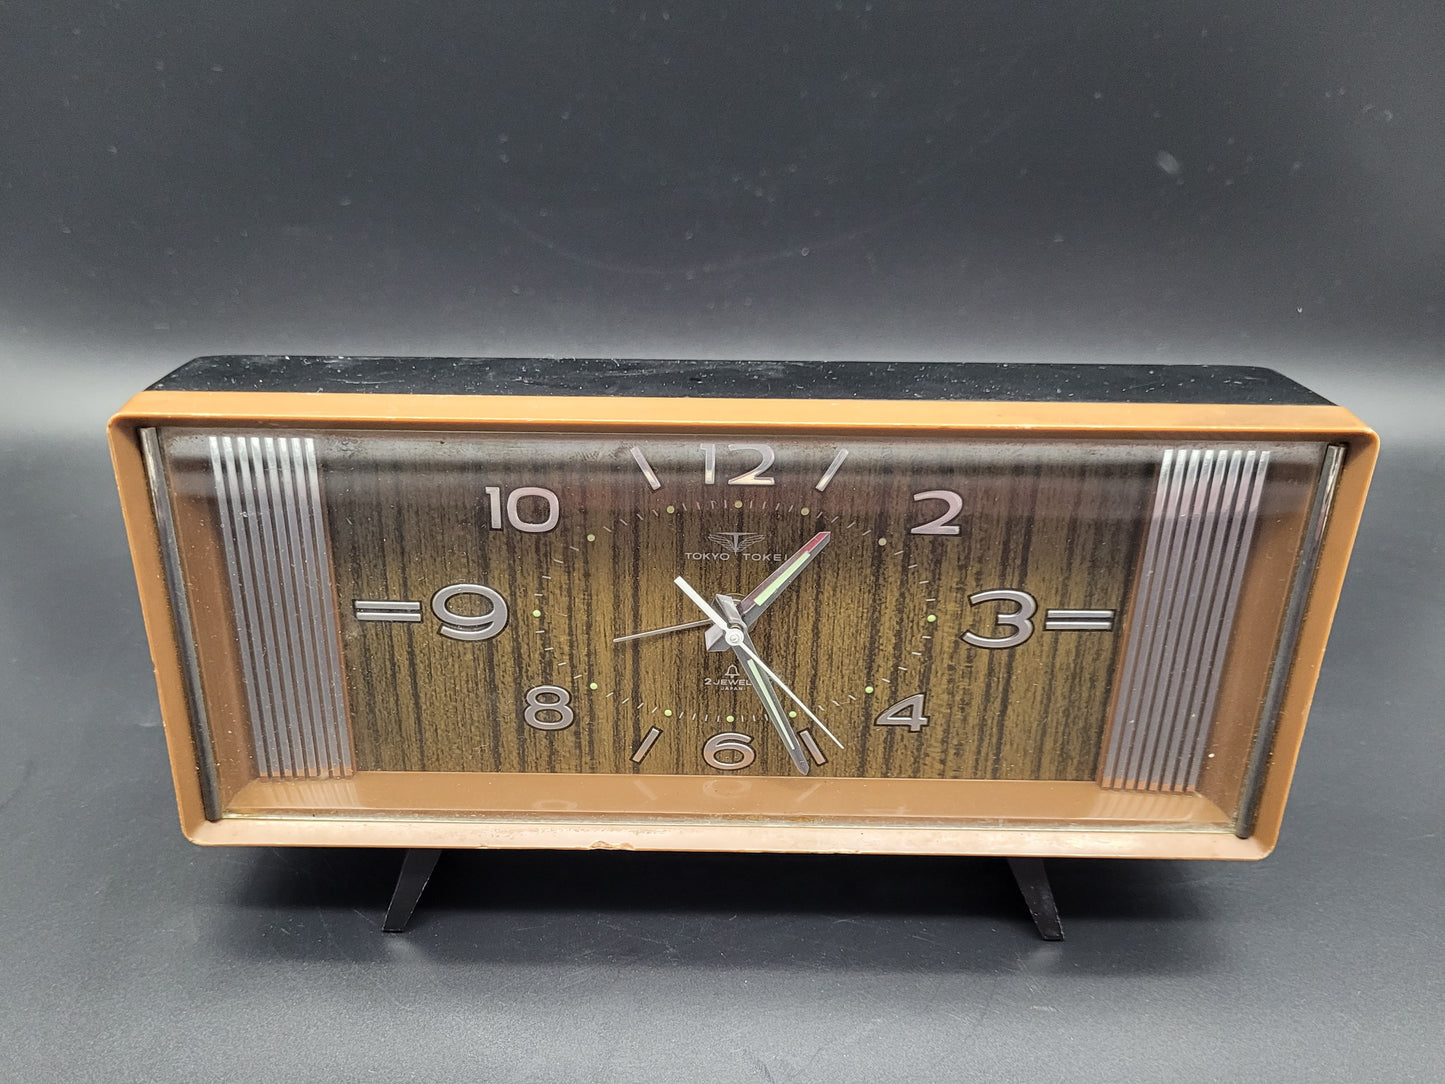 Vintage 1960s TOKYO wind up alarm clock made in Japan Retro Desk Clock